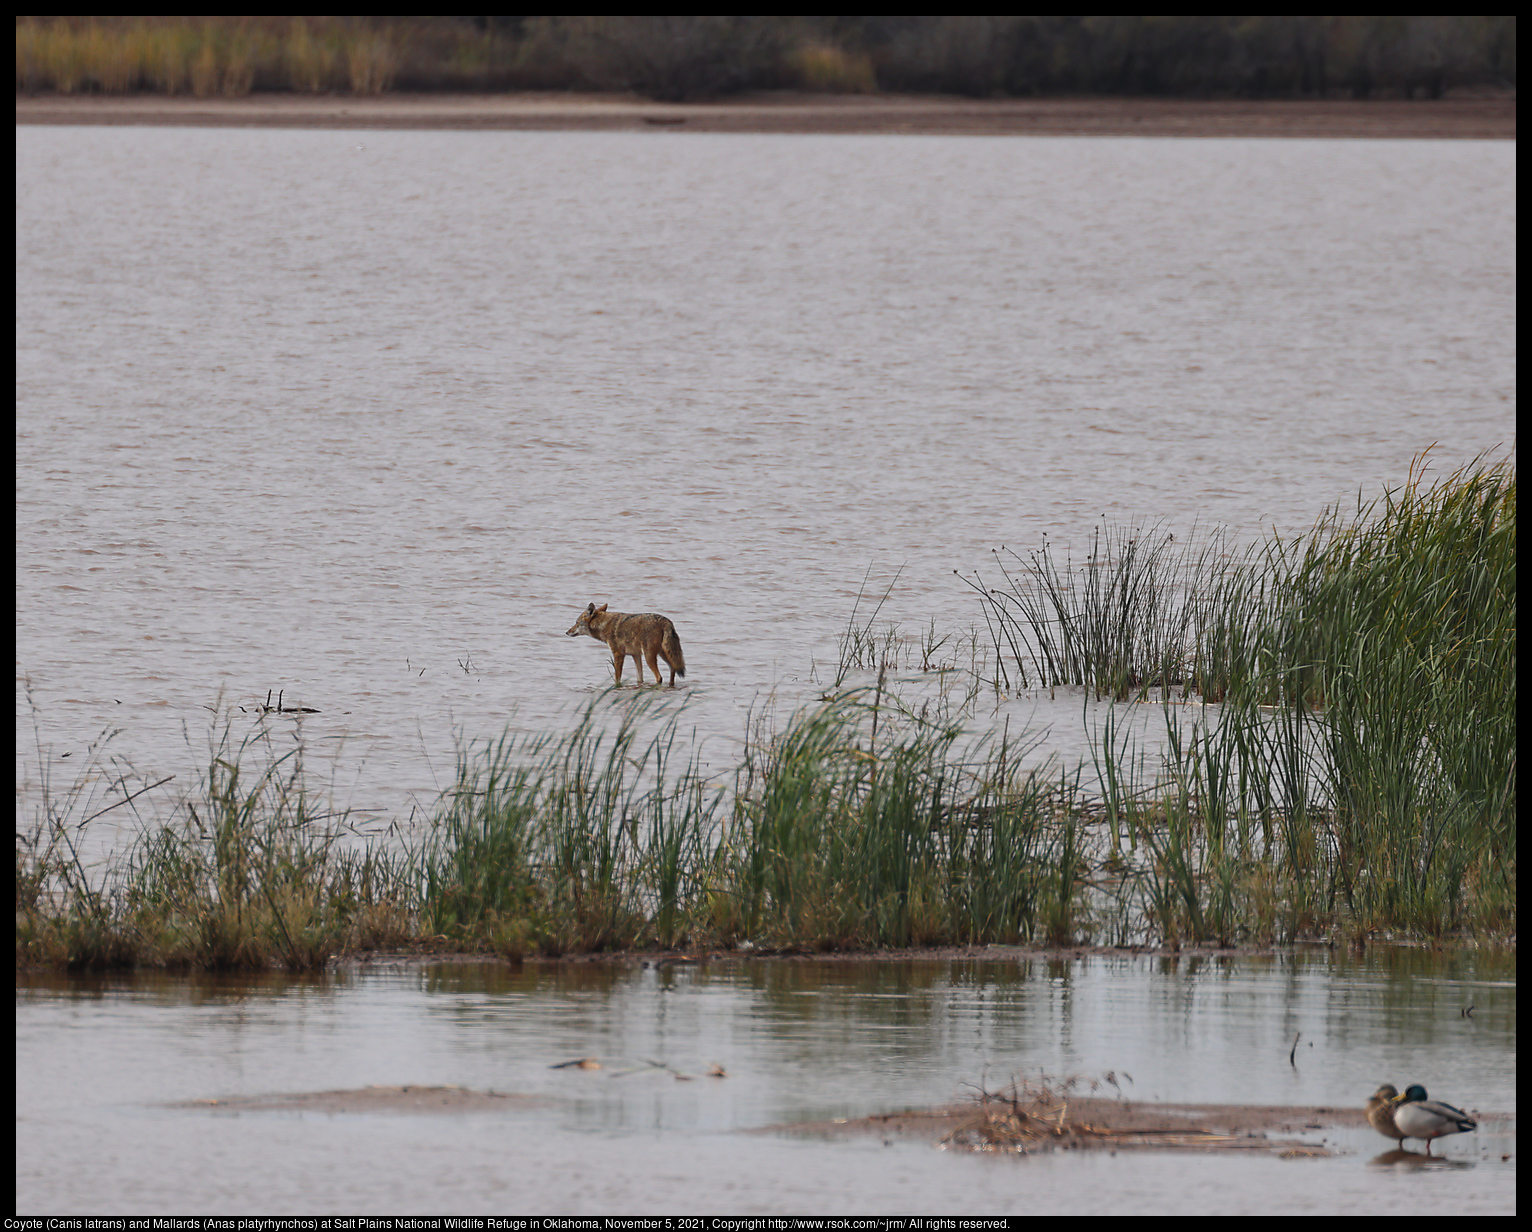 Coyote (Canis latrans) and Mallards (Anas platyrhynchos) at Salt Plains National Wildlife Refuge in Oklahoma, November 5, 2021